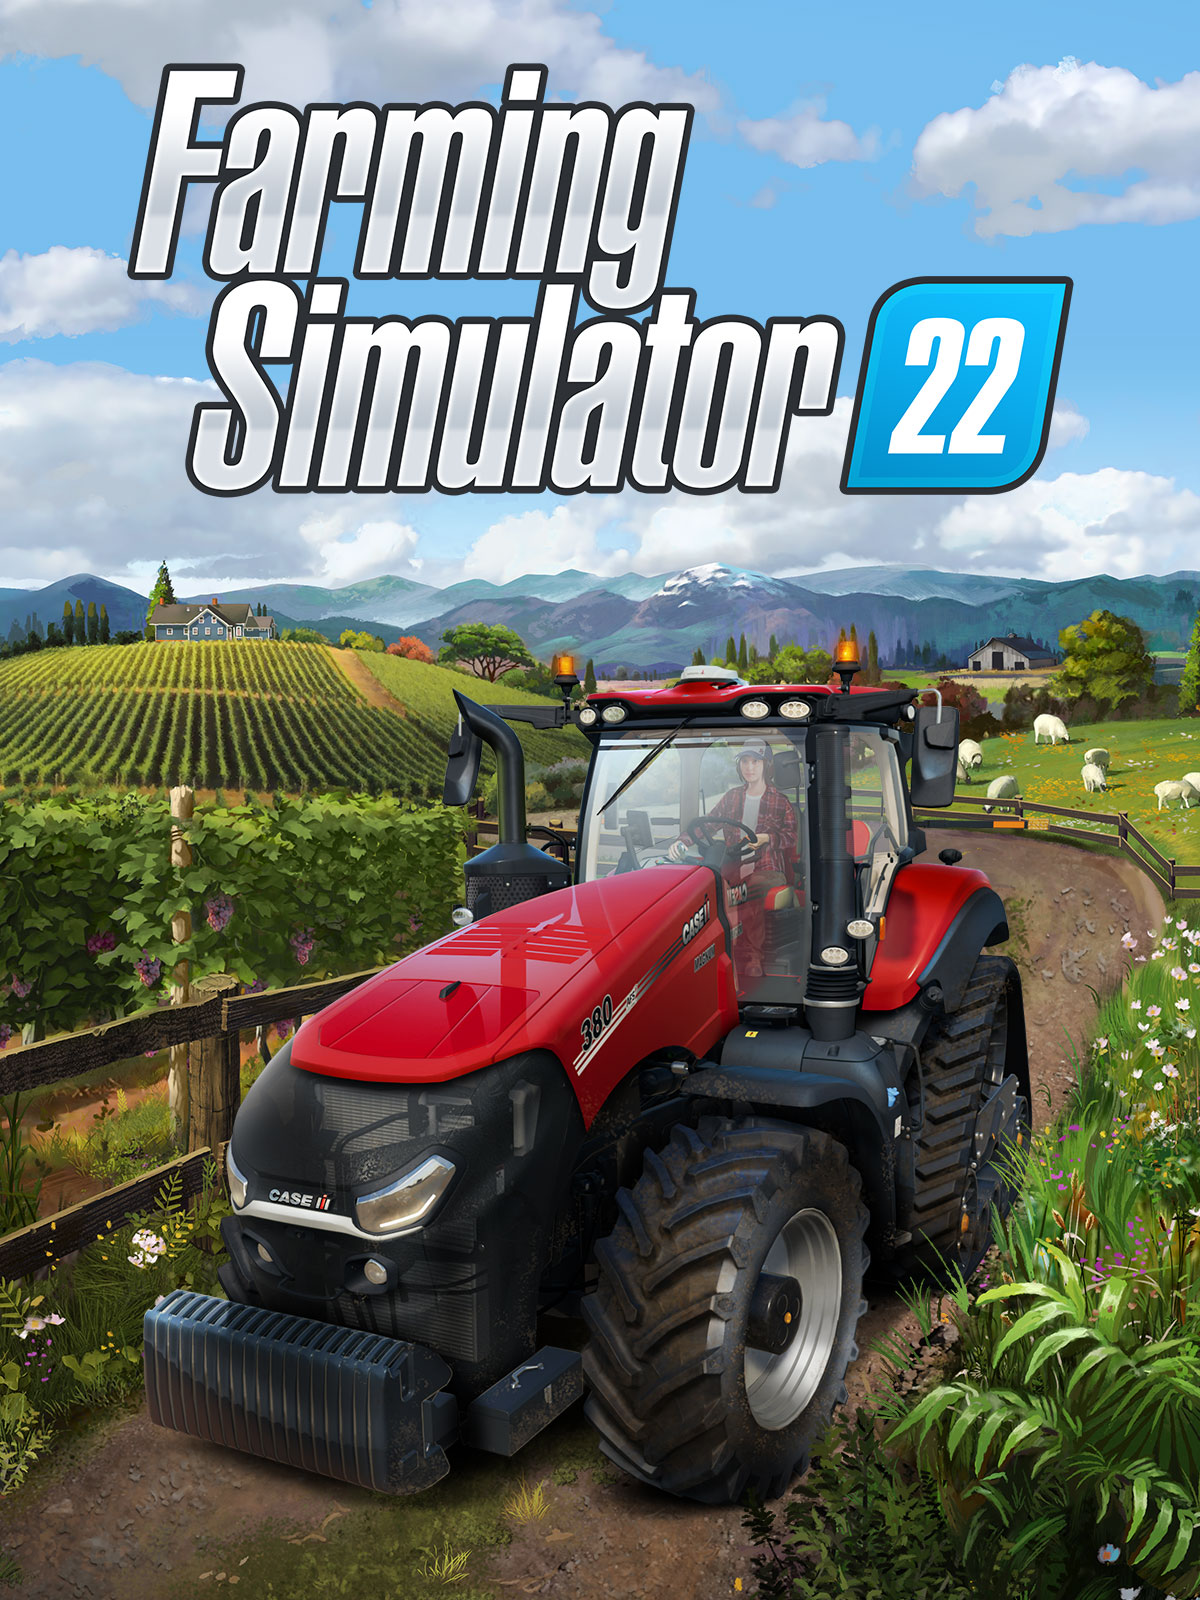 Farming Simulator 22 / Online Steam / Full Access / Warranty / Inactive / Gift